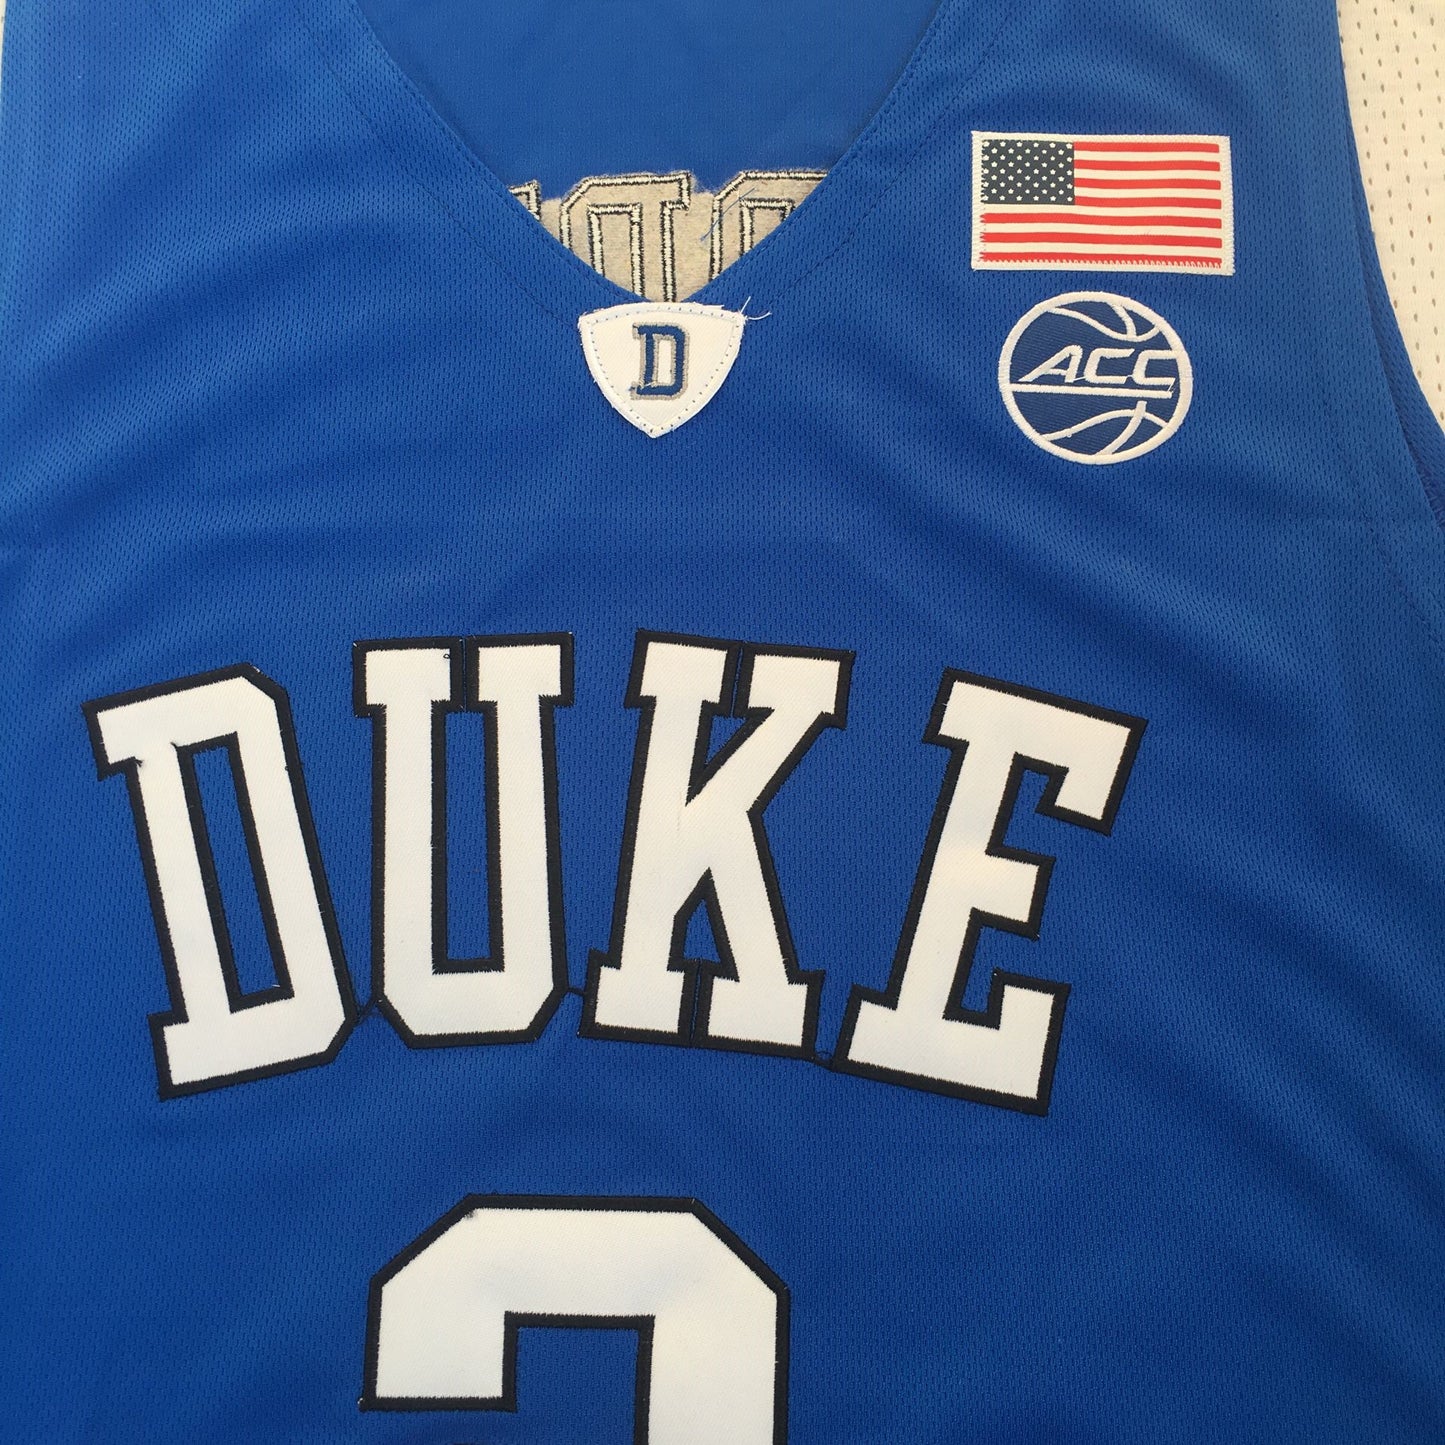 NCAA Duke University No. 2 Cam Reddish Blue Embroidered Jersey